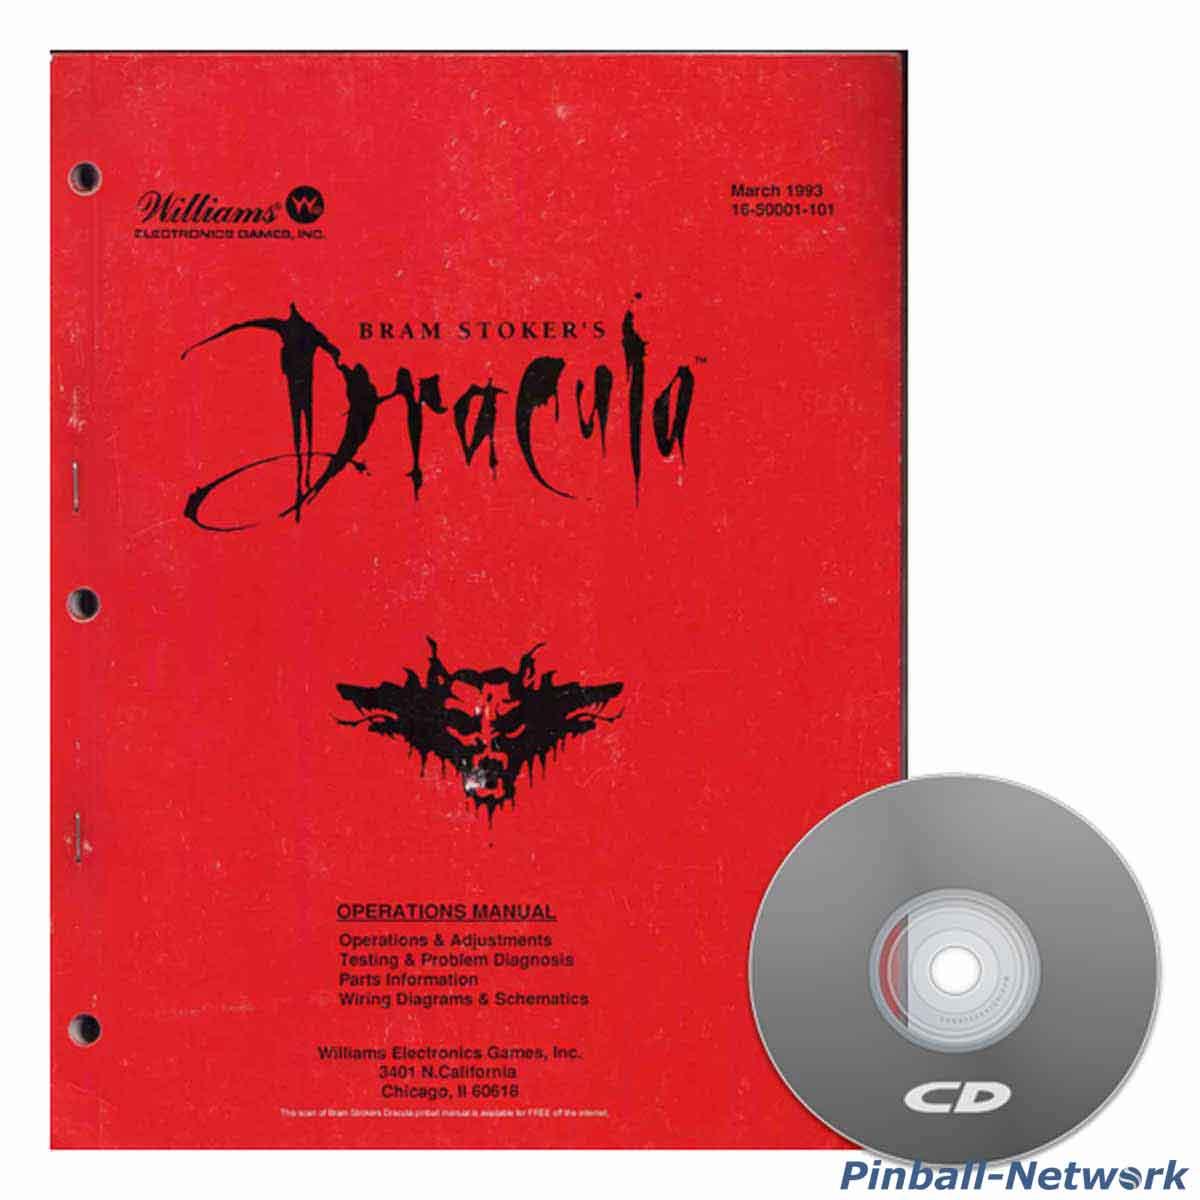 Bram Stoker's Dracula Operations Manual